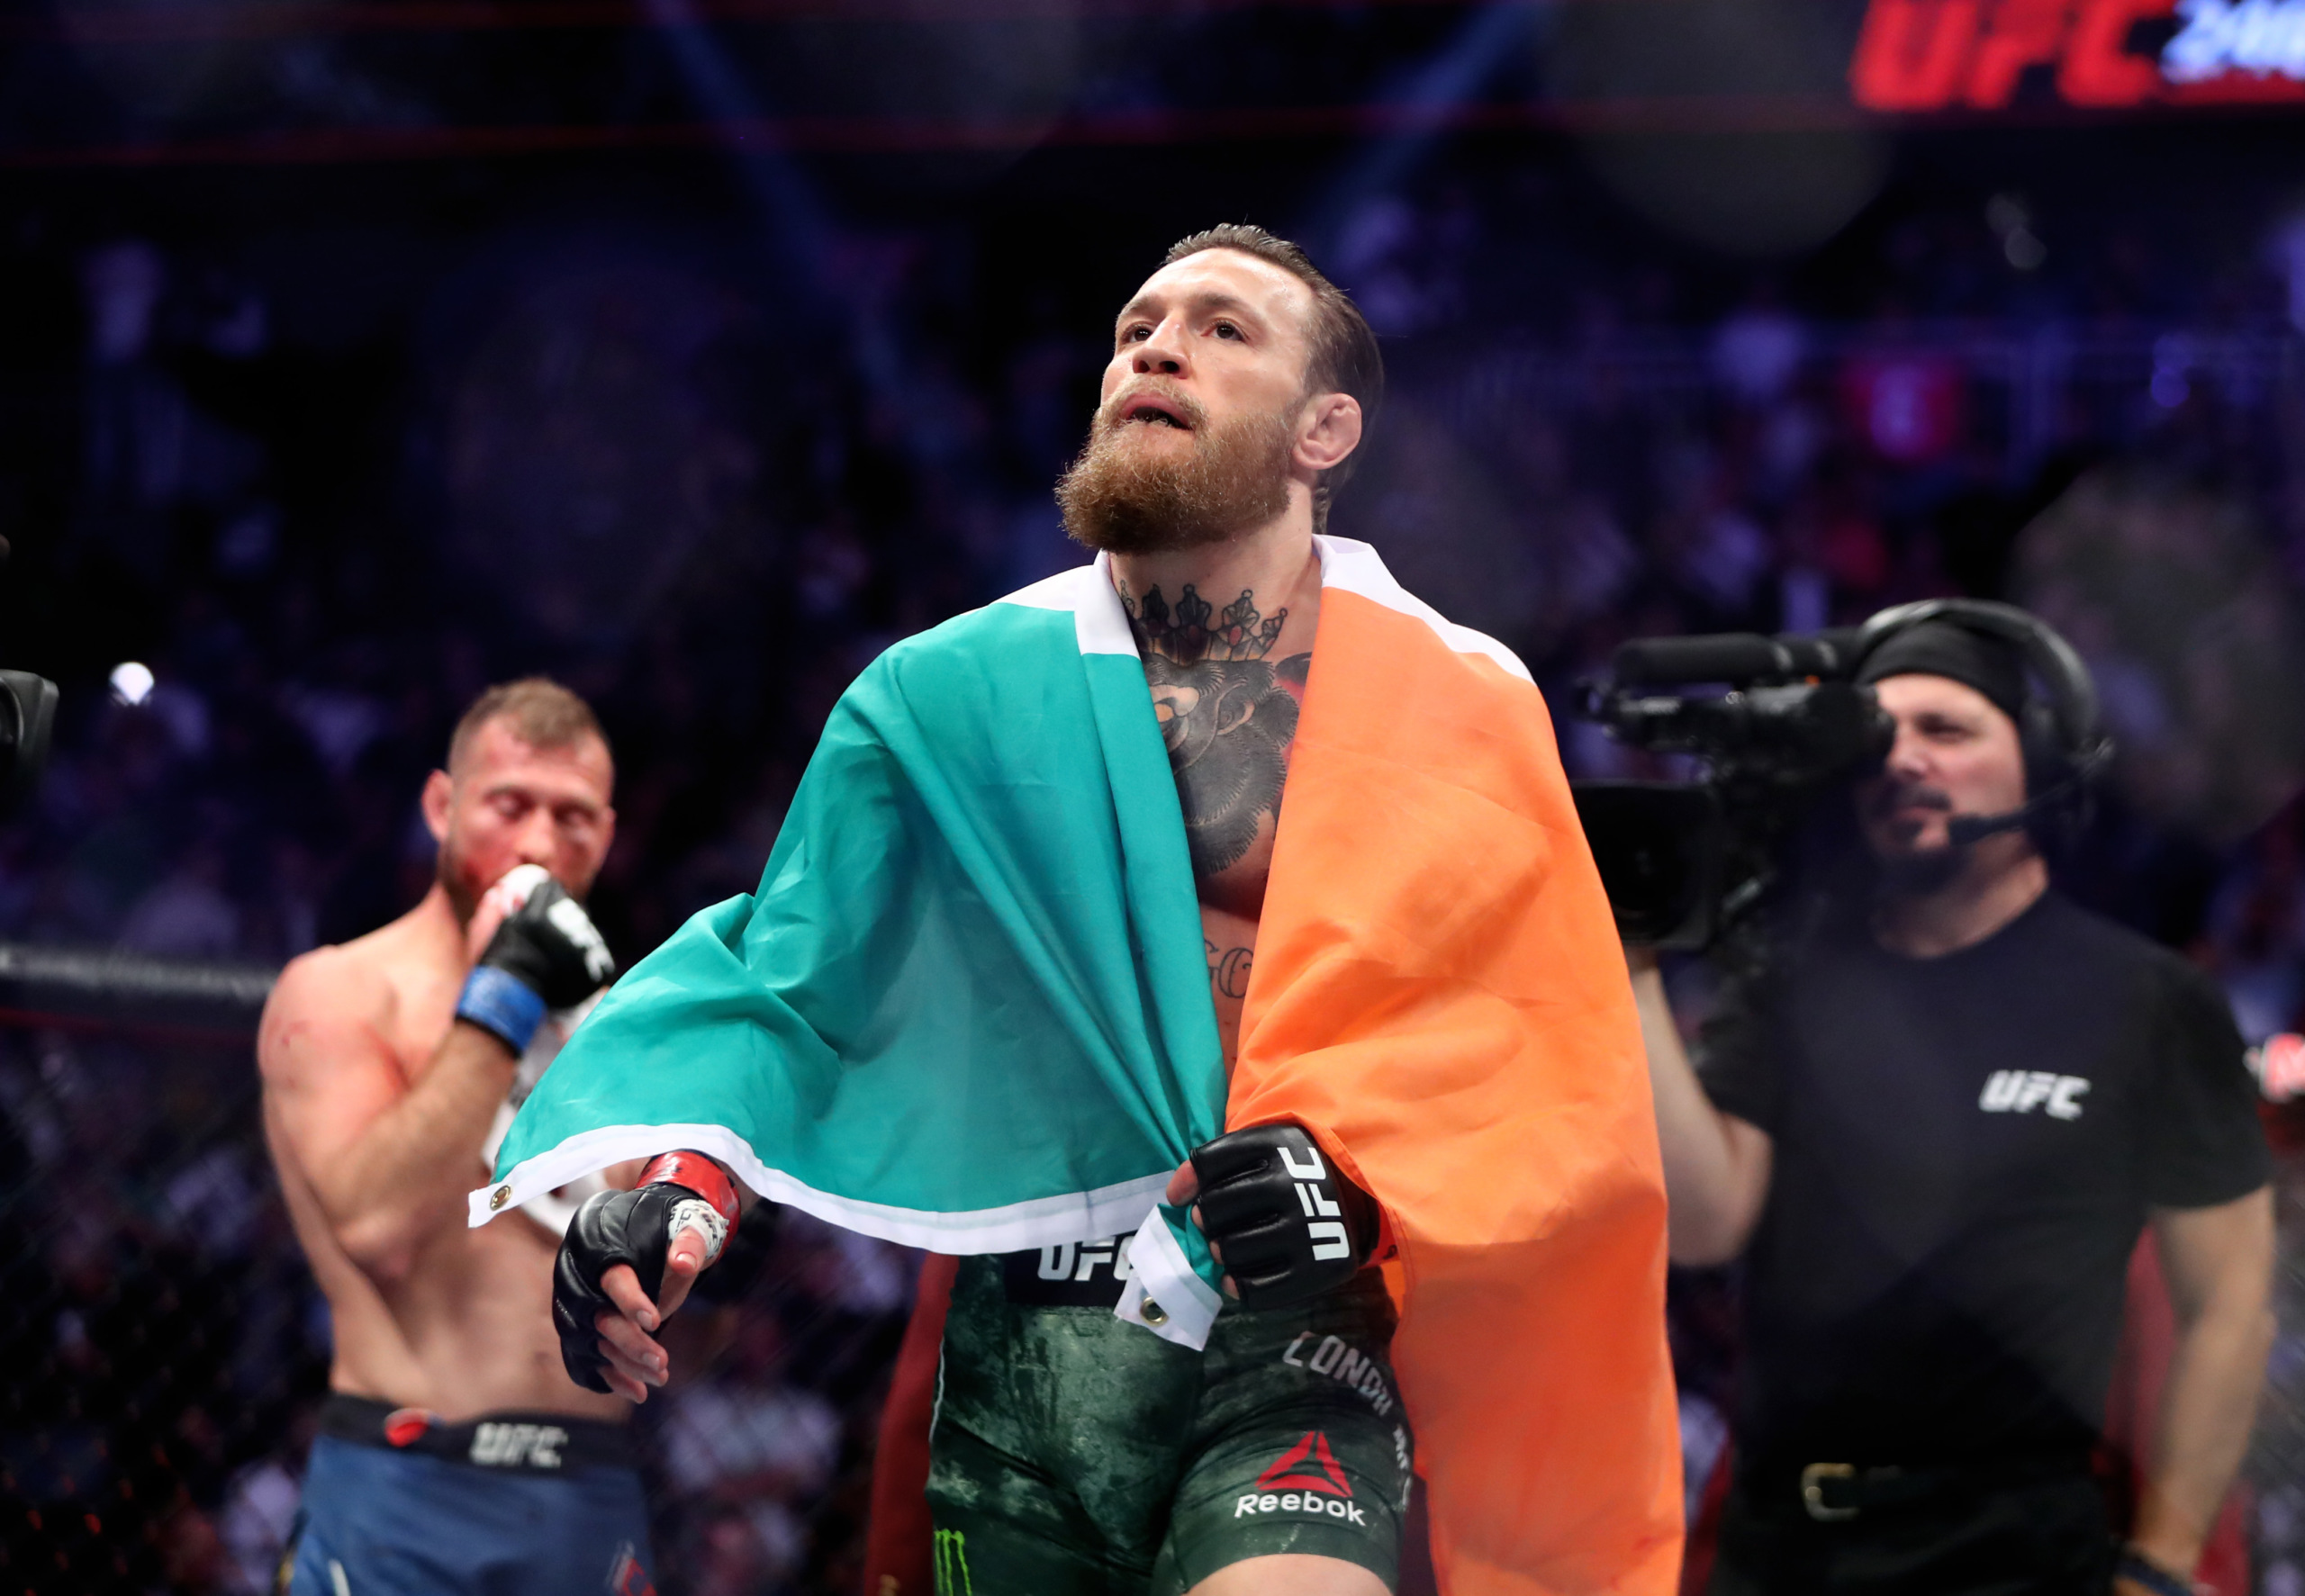 Conor McGregor draped in the Ireland flag